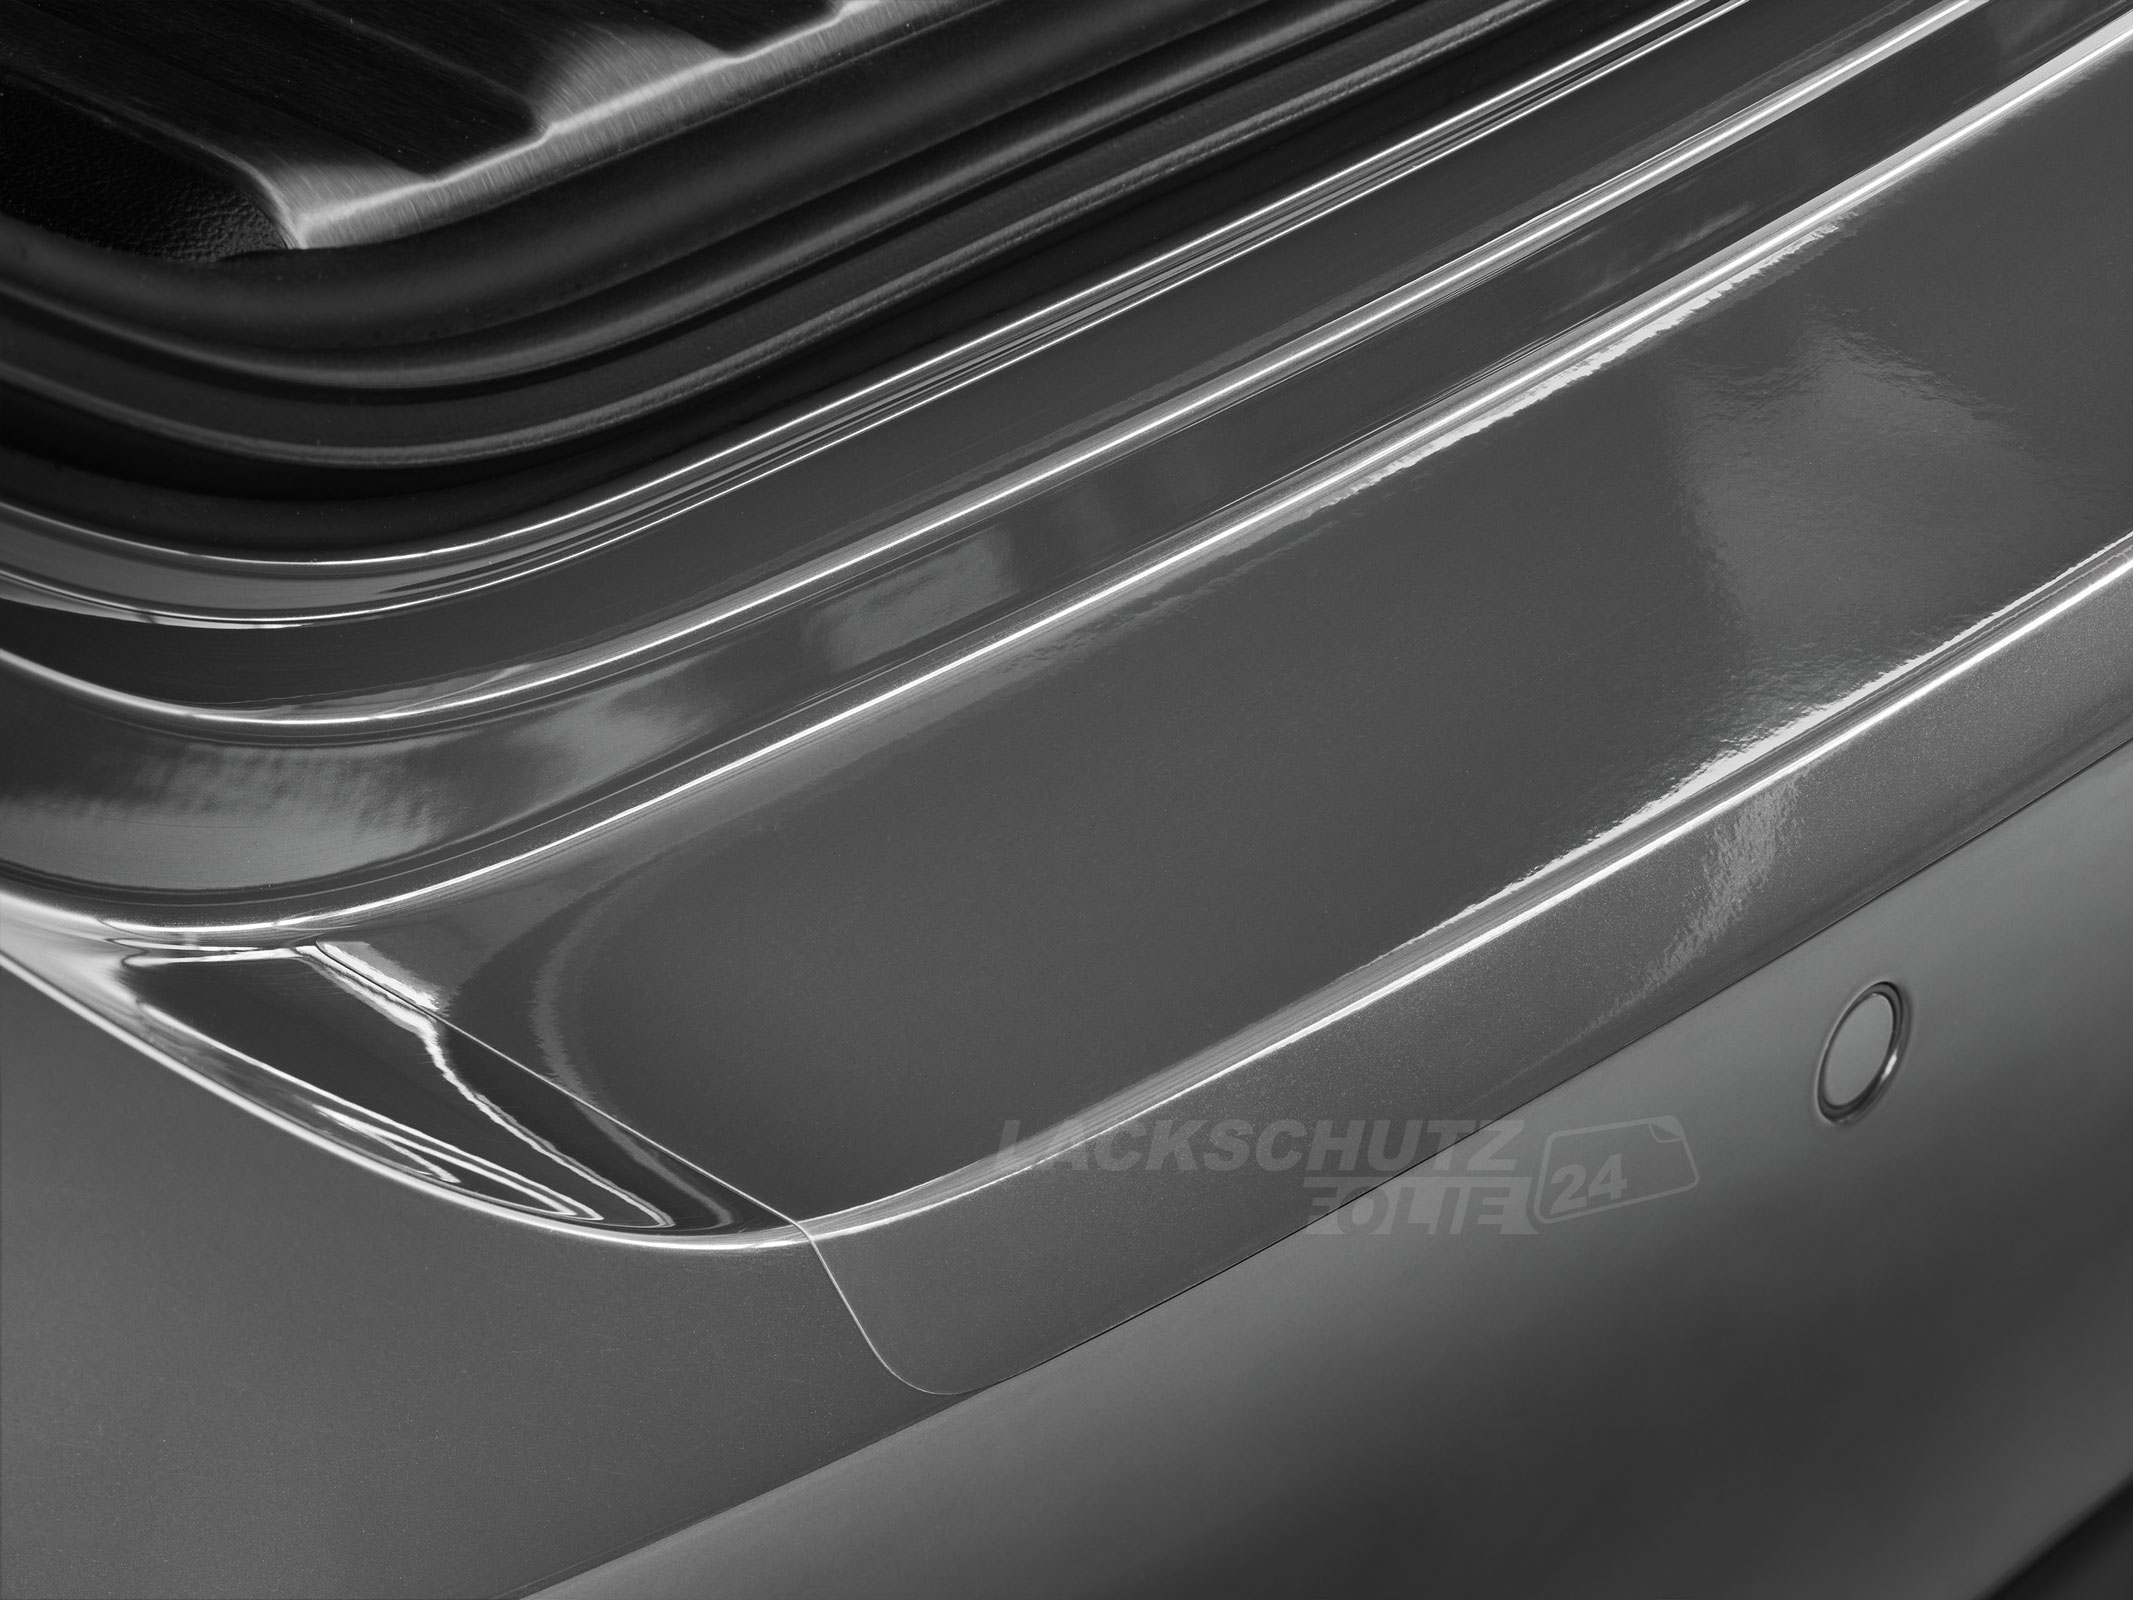 Ladekantenschutzfolie - Transparent Glatt Hochglänzend für Audi A3 Sportback Typ 8V, BJ 02/2013-2020